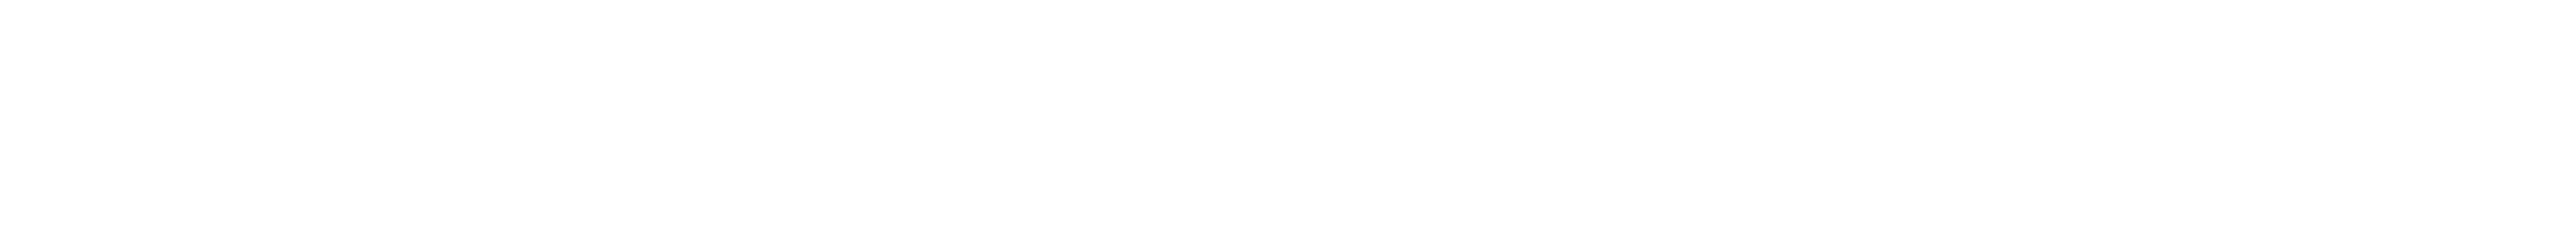 hide and shine logo